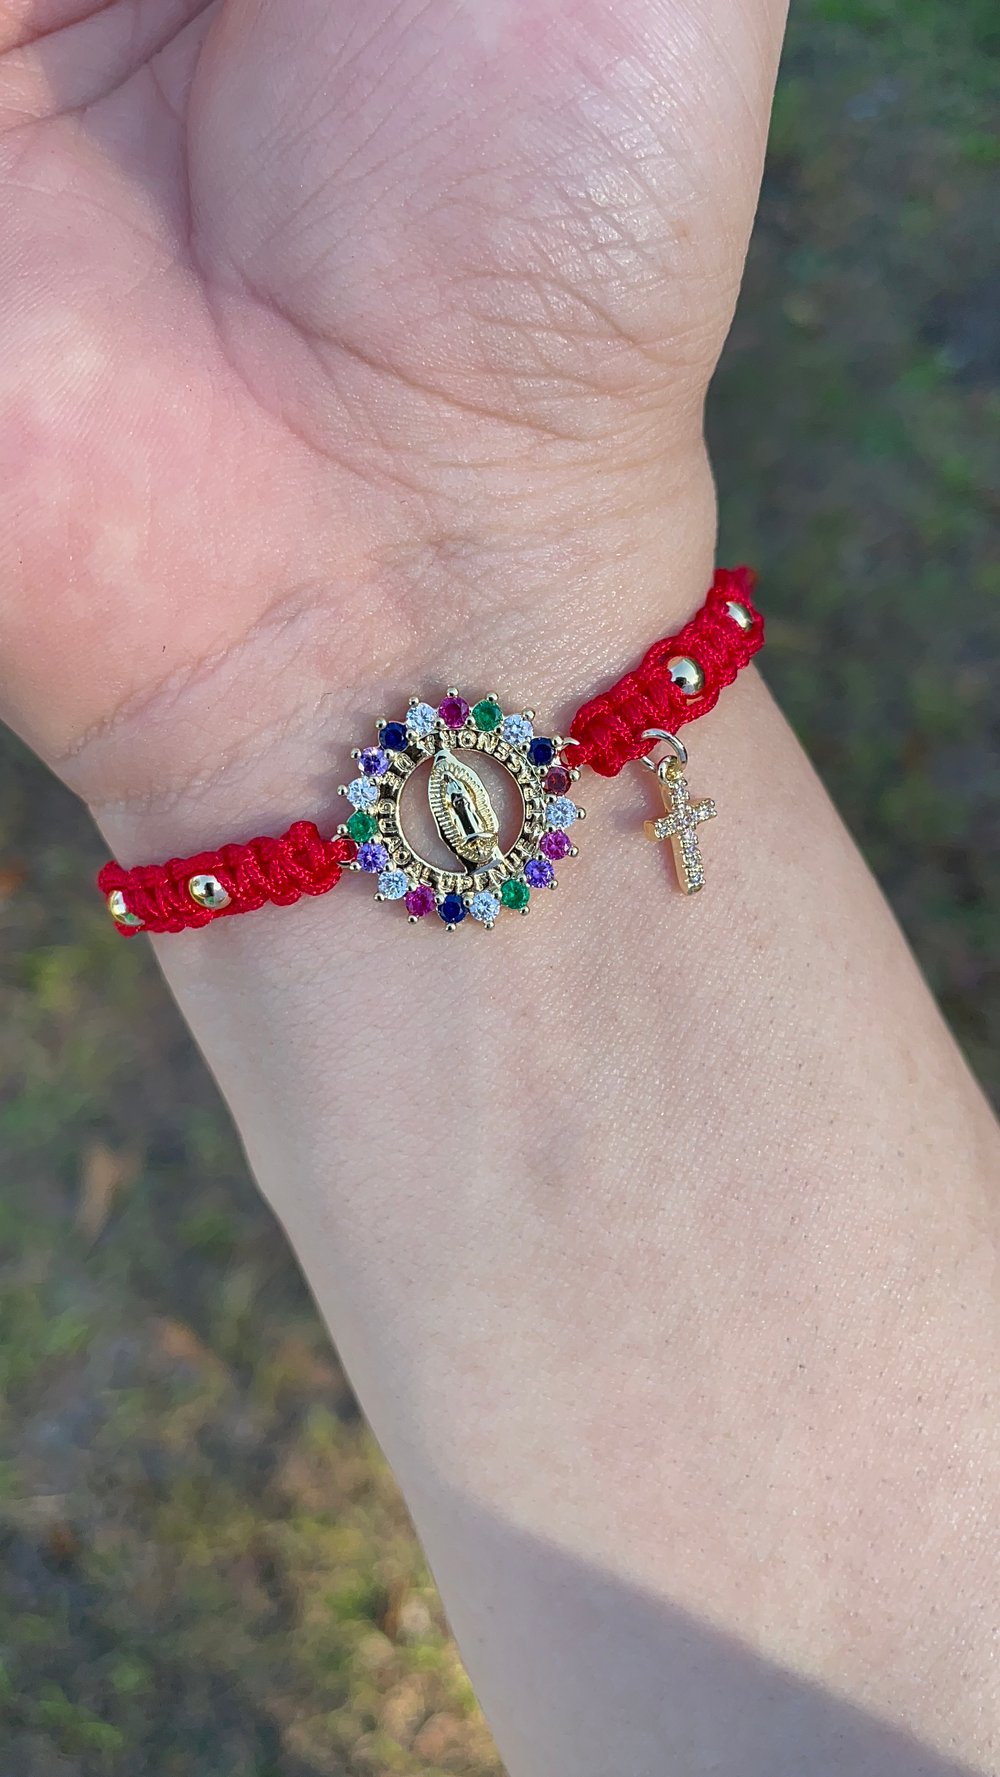 Virgencita with cross charm bracelet